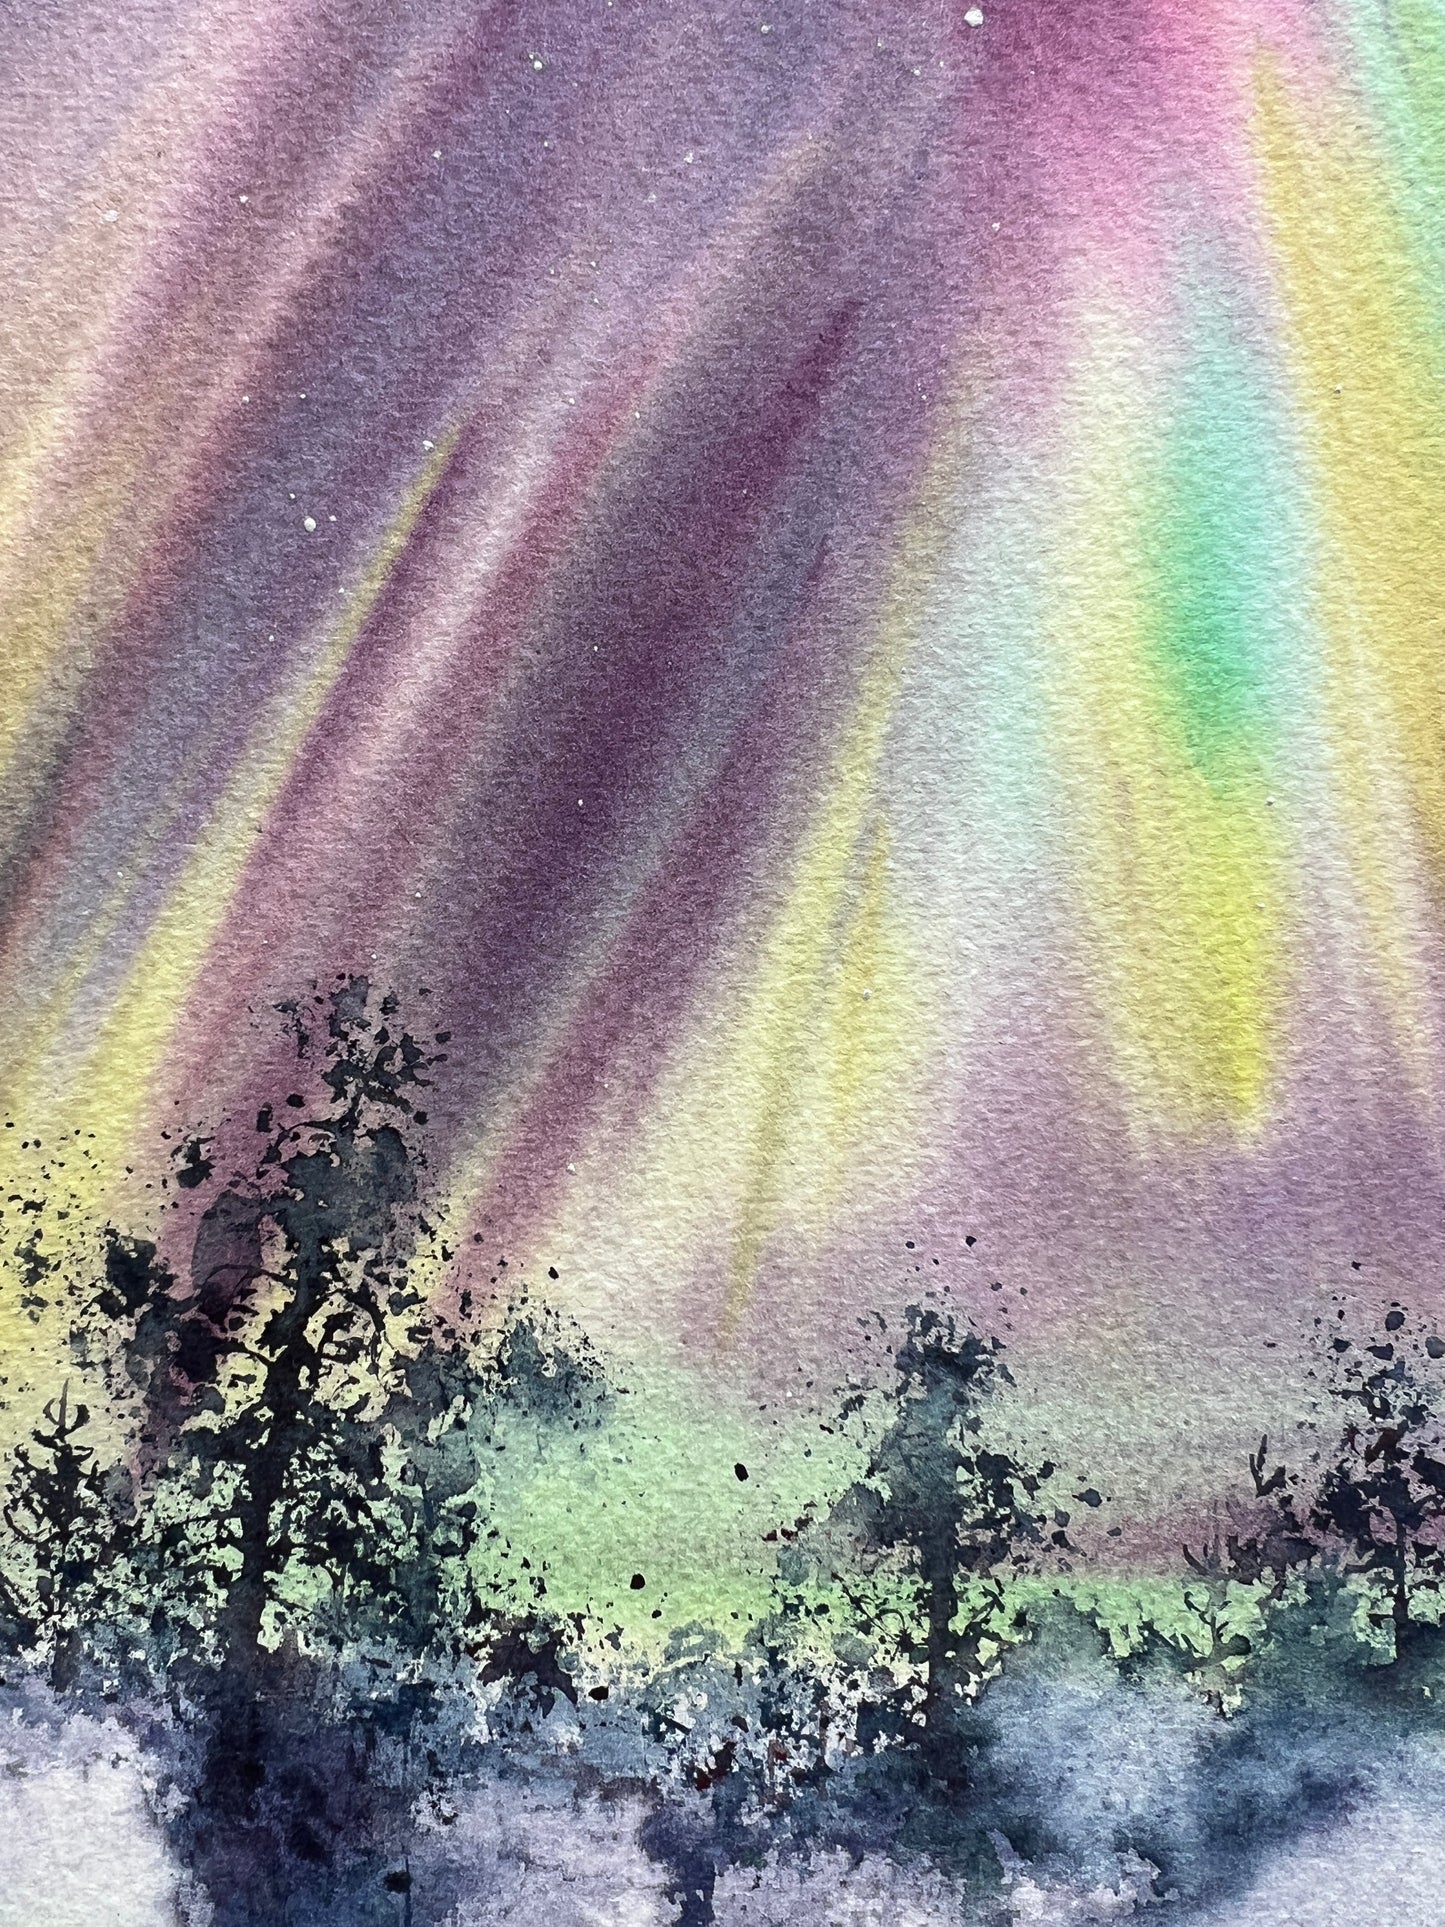 Aurora Borealis Painting Original Watercolor, Northern lights Wall Art, Winter Nordic Landscape, Small Artwork